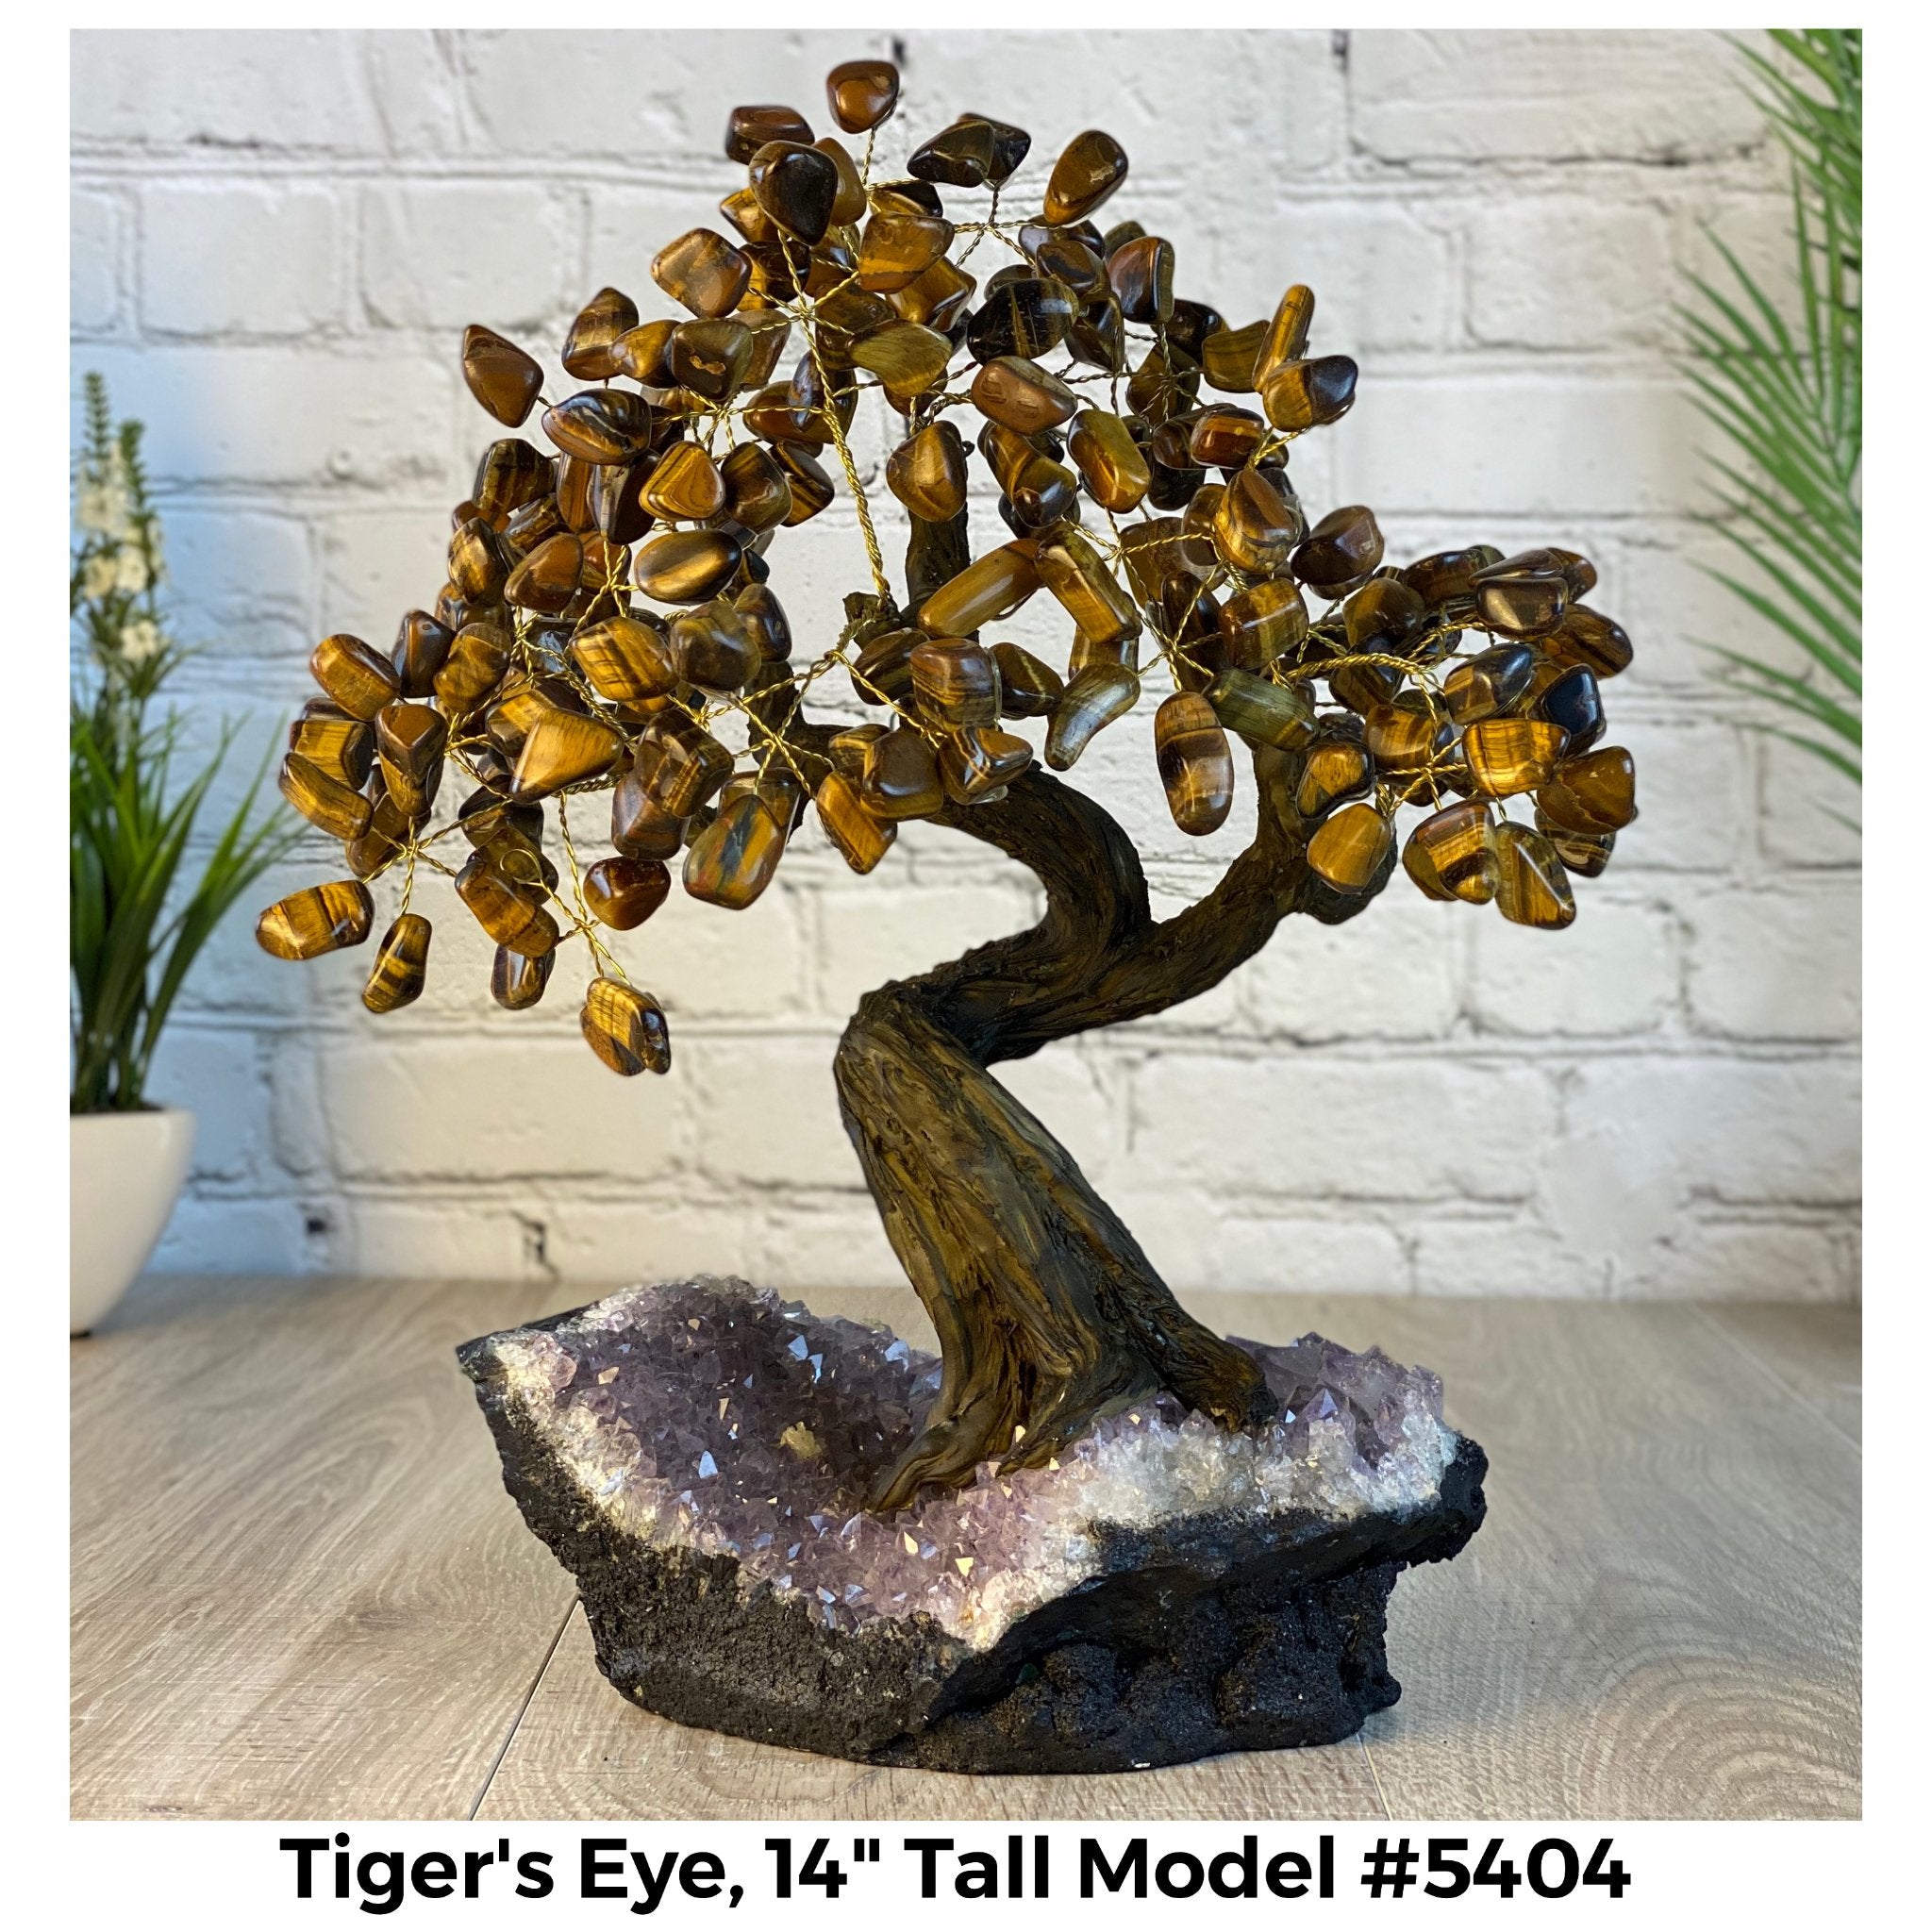 Tiger's Eye 14" Tall Handmade Gemstone Tree on a Crystal base, 180 Gems #5404TIGE - Brazil GemsBrazil GemsTiger's Eye 14" Tall Handmade Gemstone Tree on a Crystal base, 180 Gems #5404TIGEGemstone Trees5404TIGE